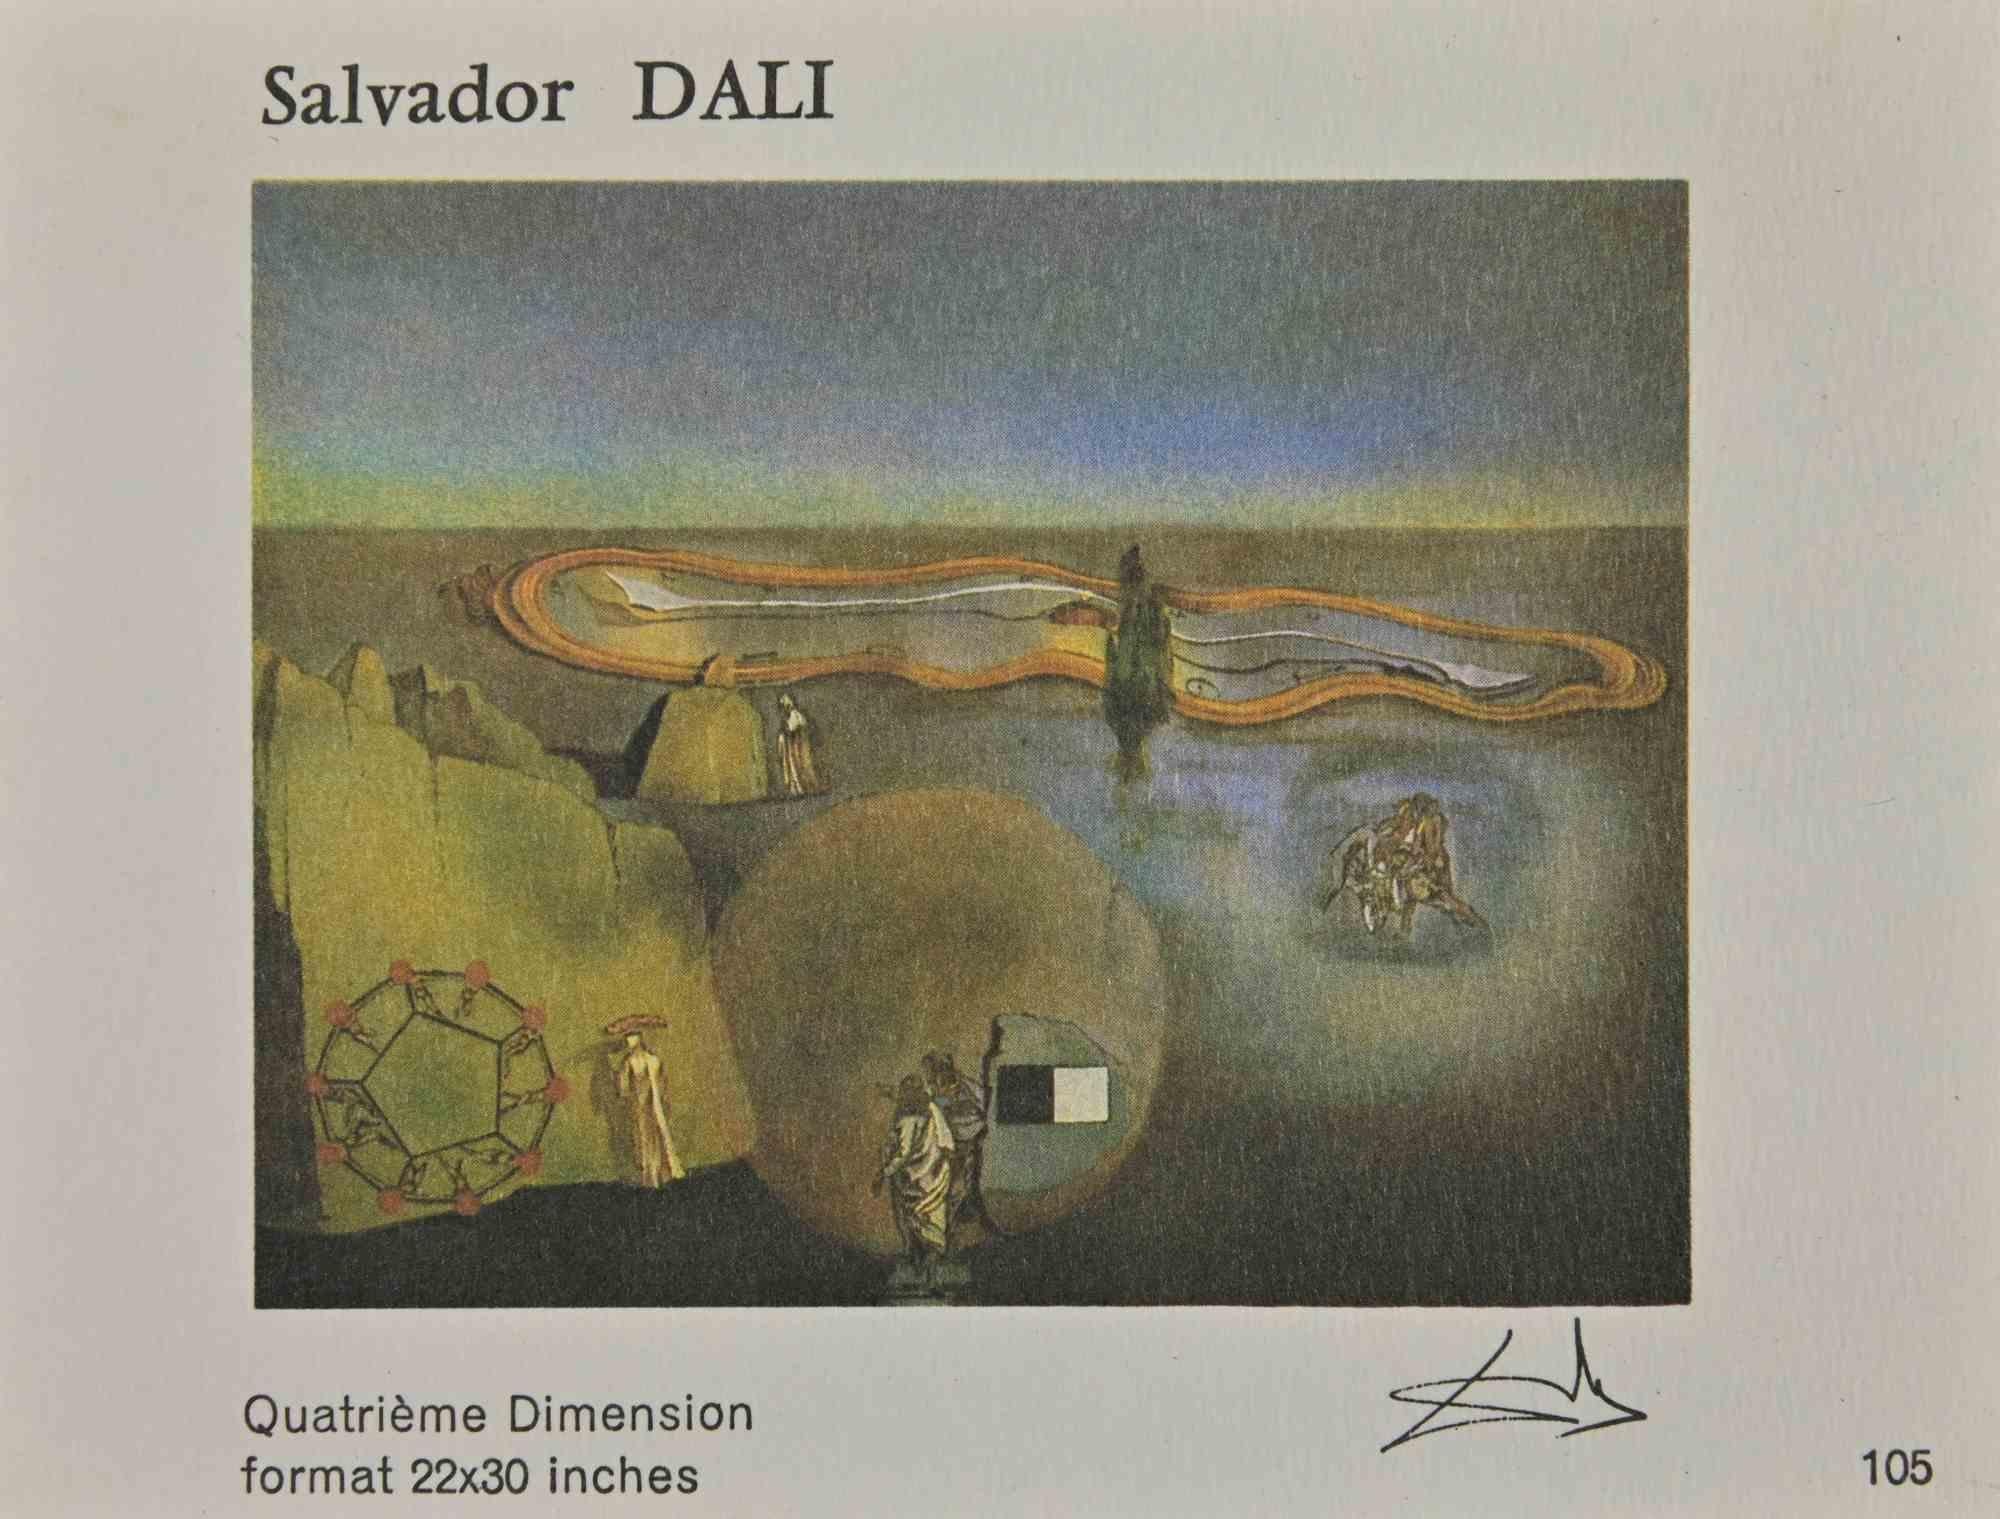 Collection of Vintage Cards After Salvador Dalì - 1980s For Sale 7